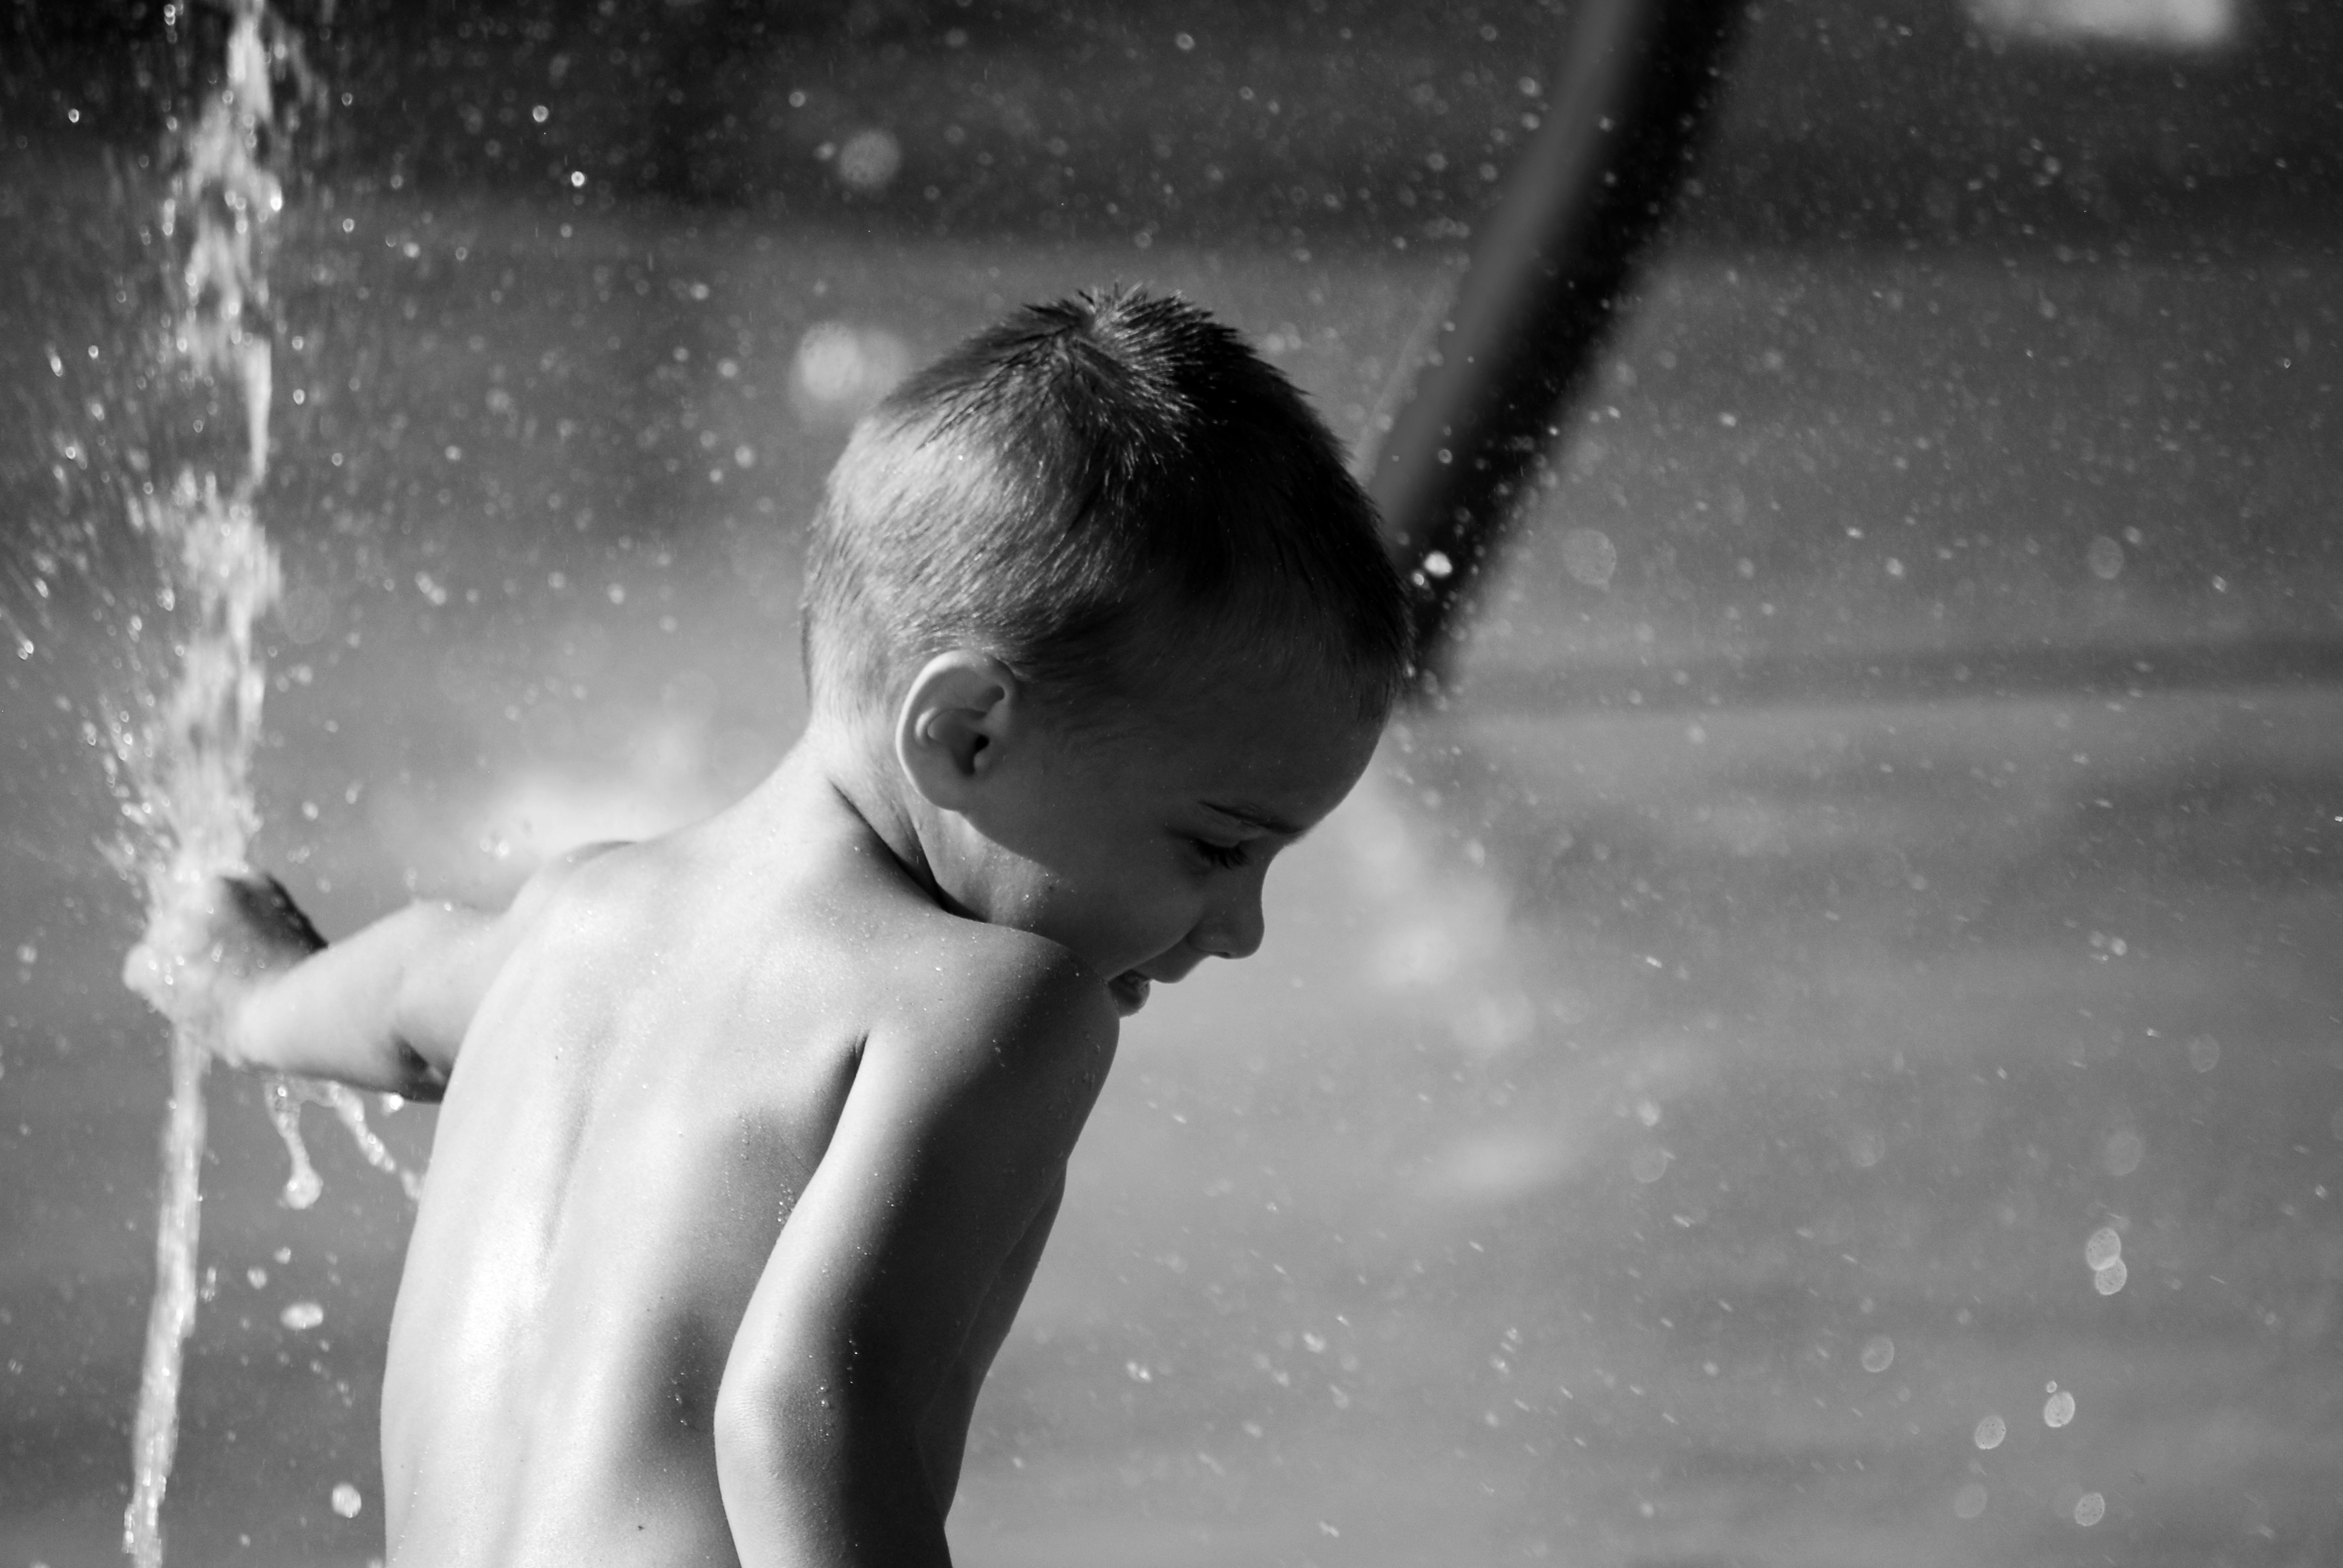 Little Boy in Sprinkler